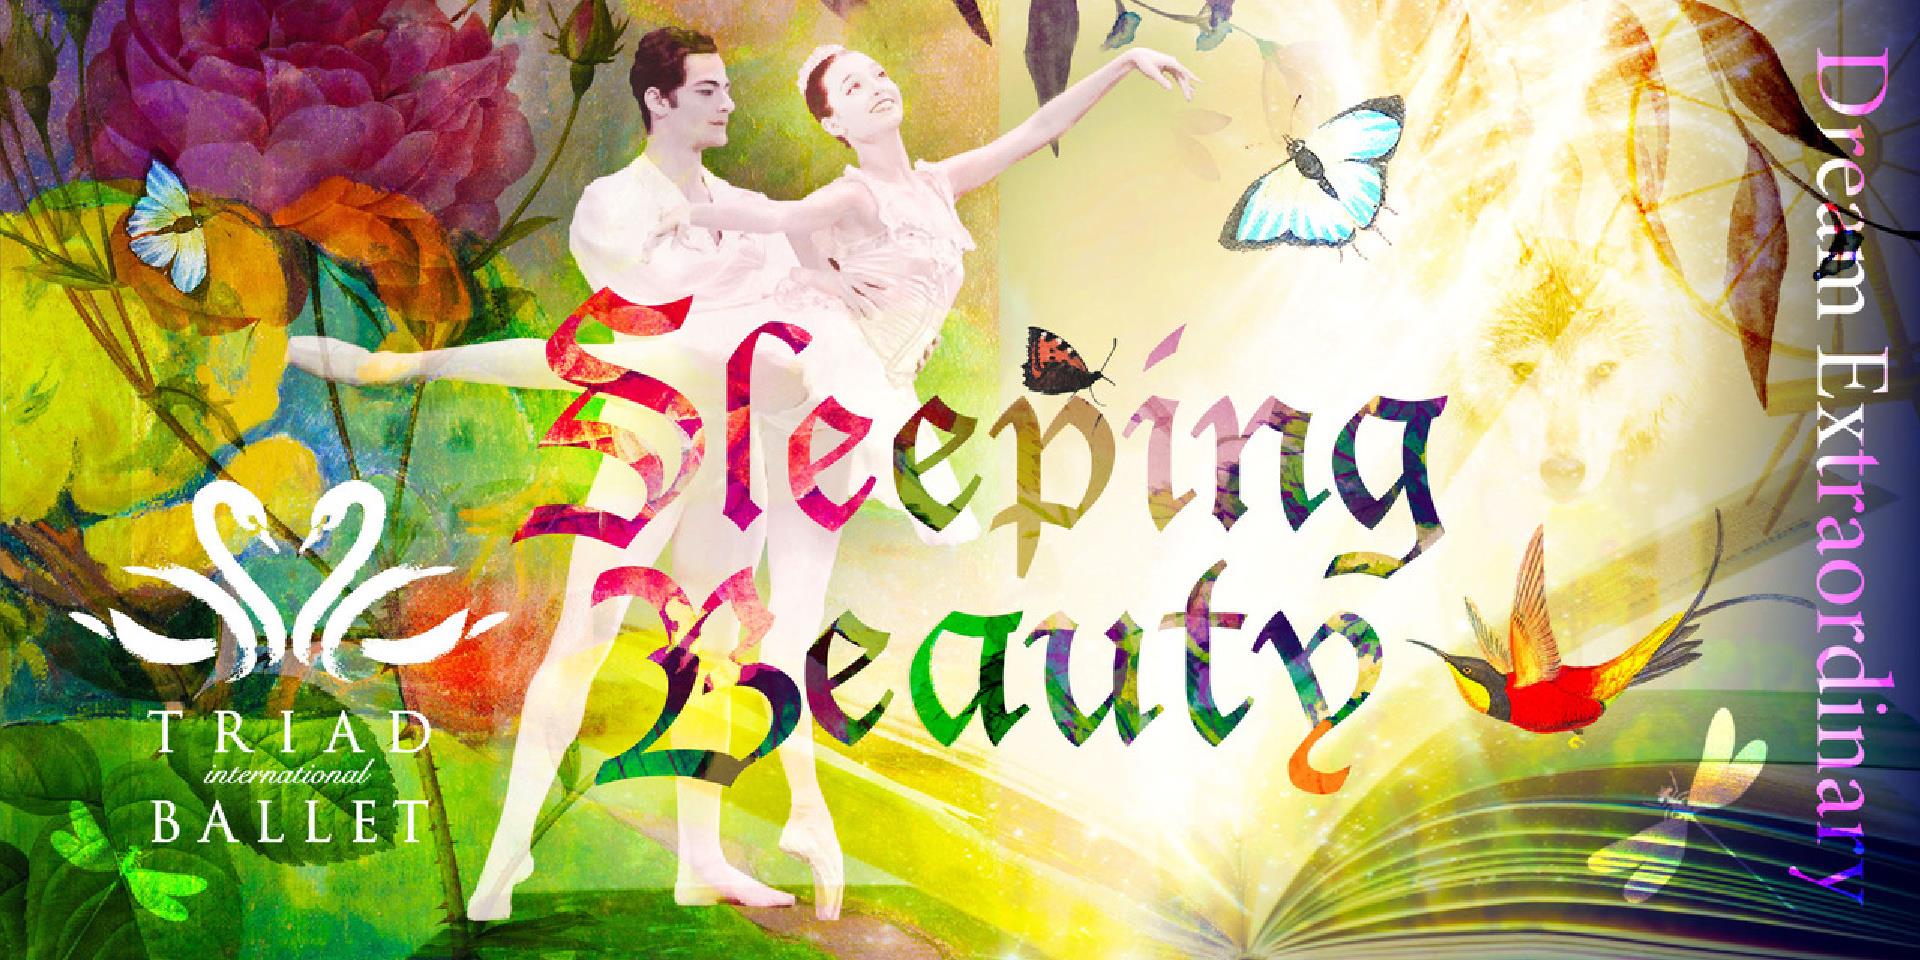 Sleeping Beauty - Triad International Ballet